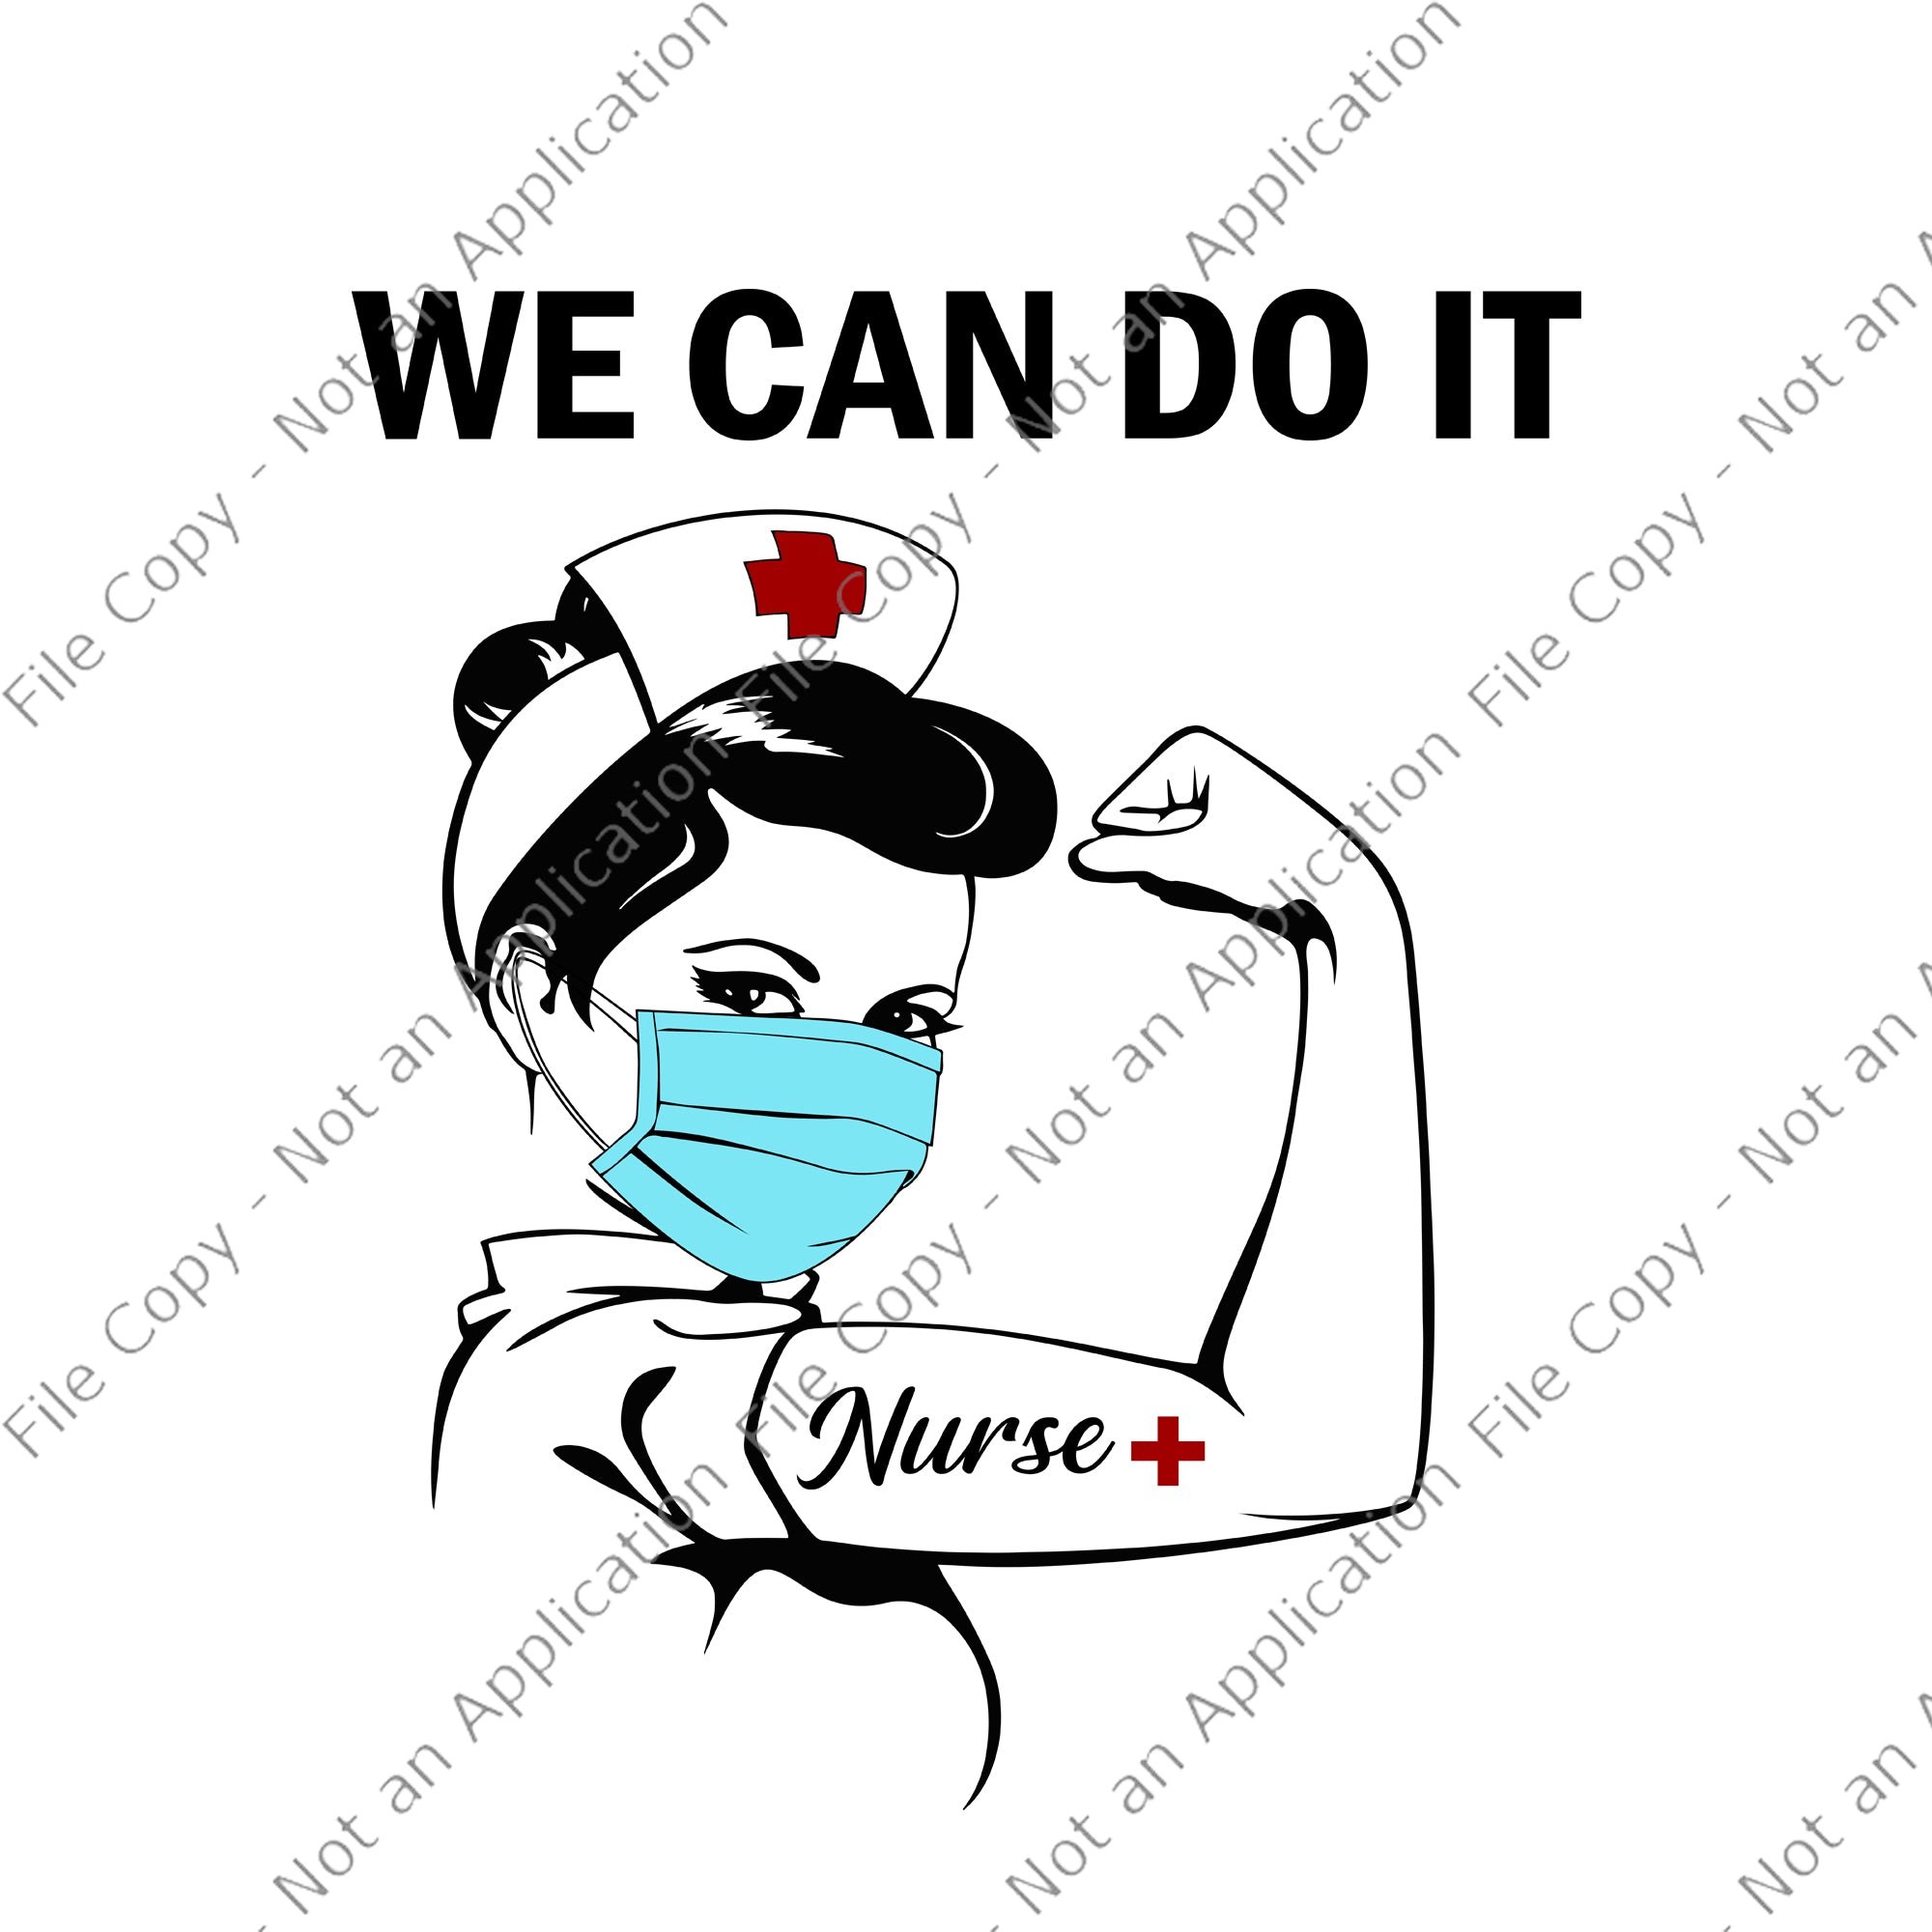 We can do it nurse svg, strong woman nurse svg, strong woman nurse, strong woman svg, strong woman vector, we can do it nurse, nurse svg